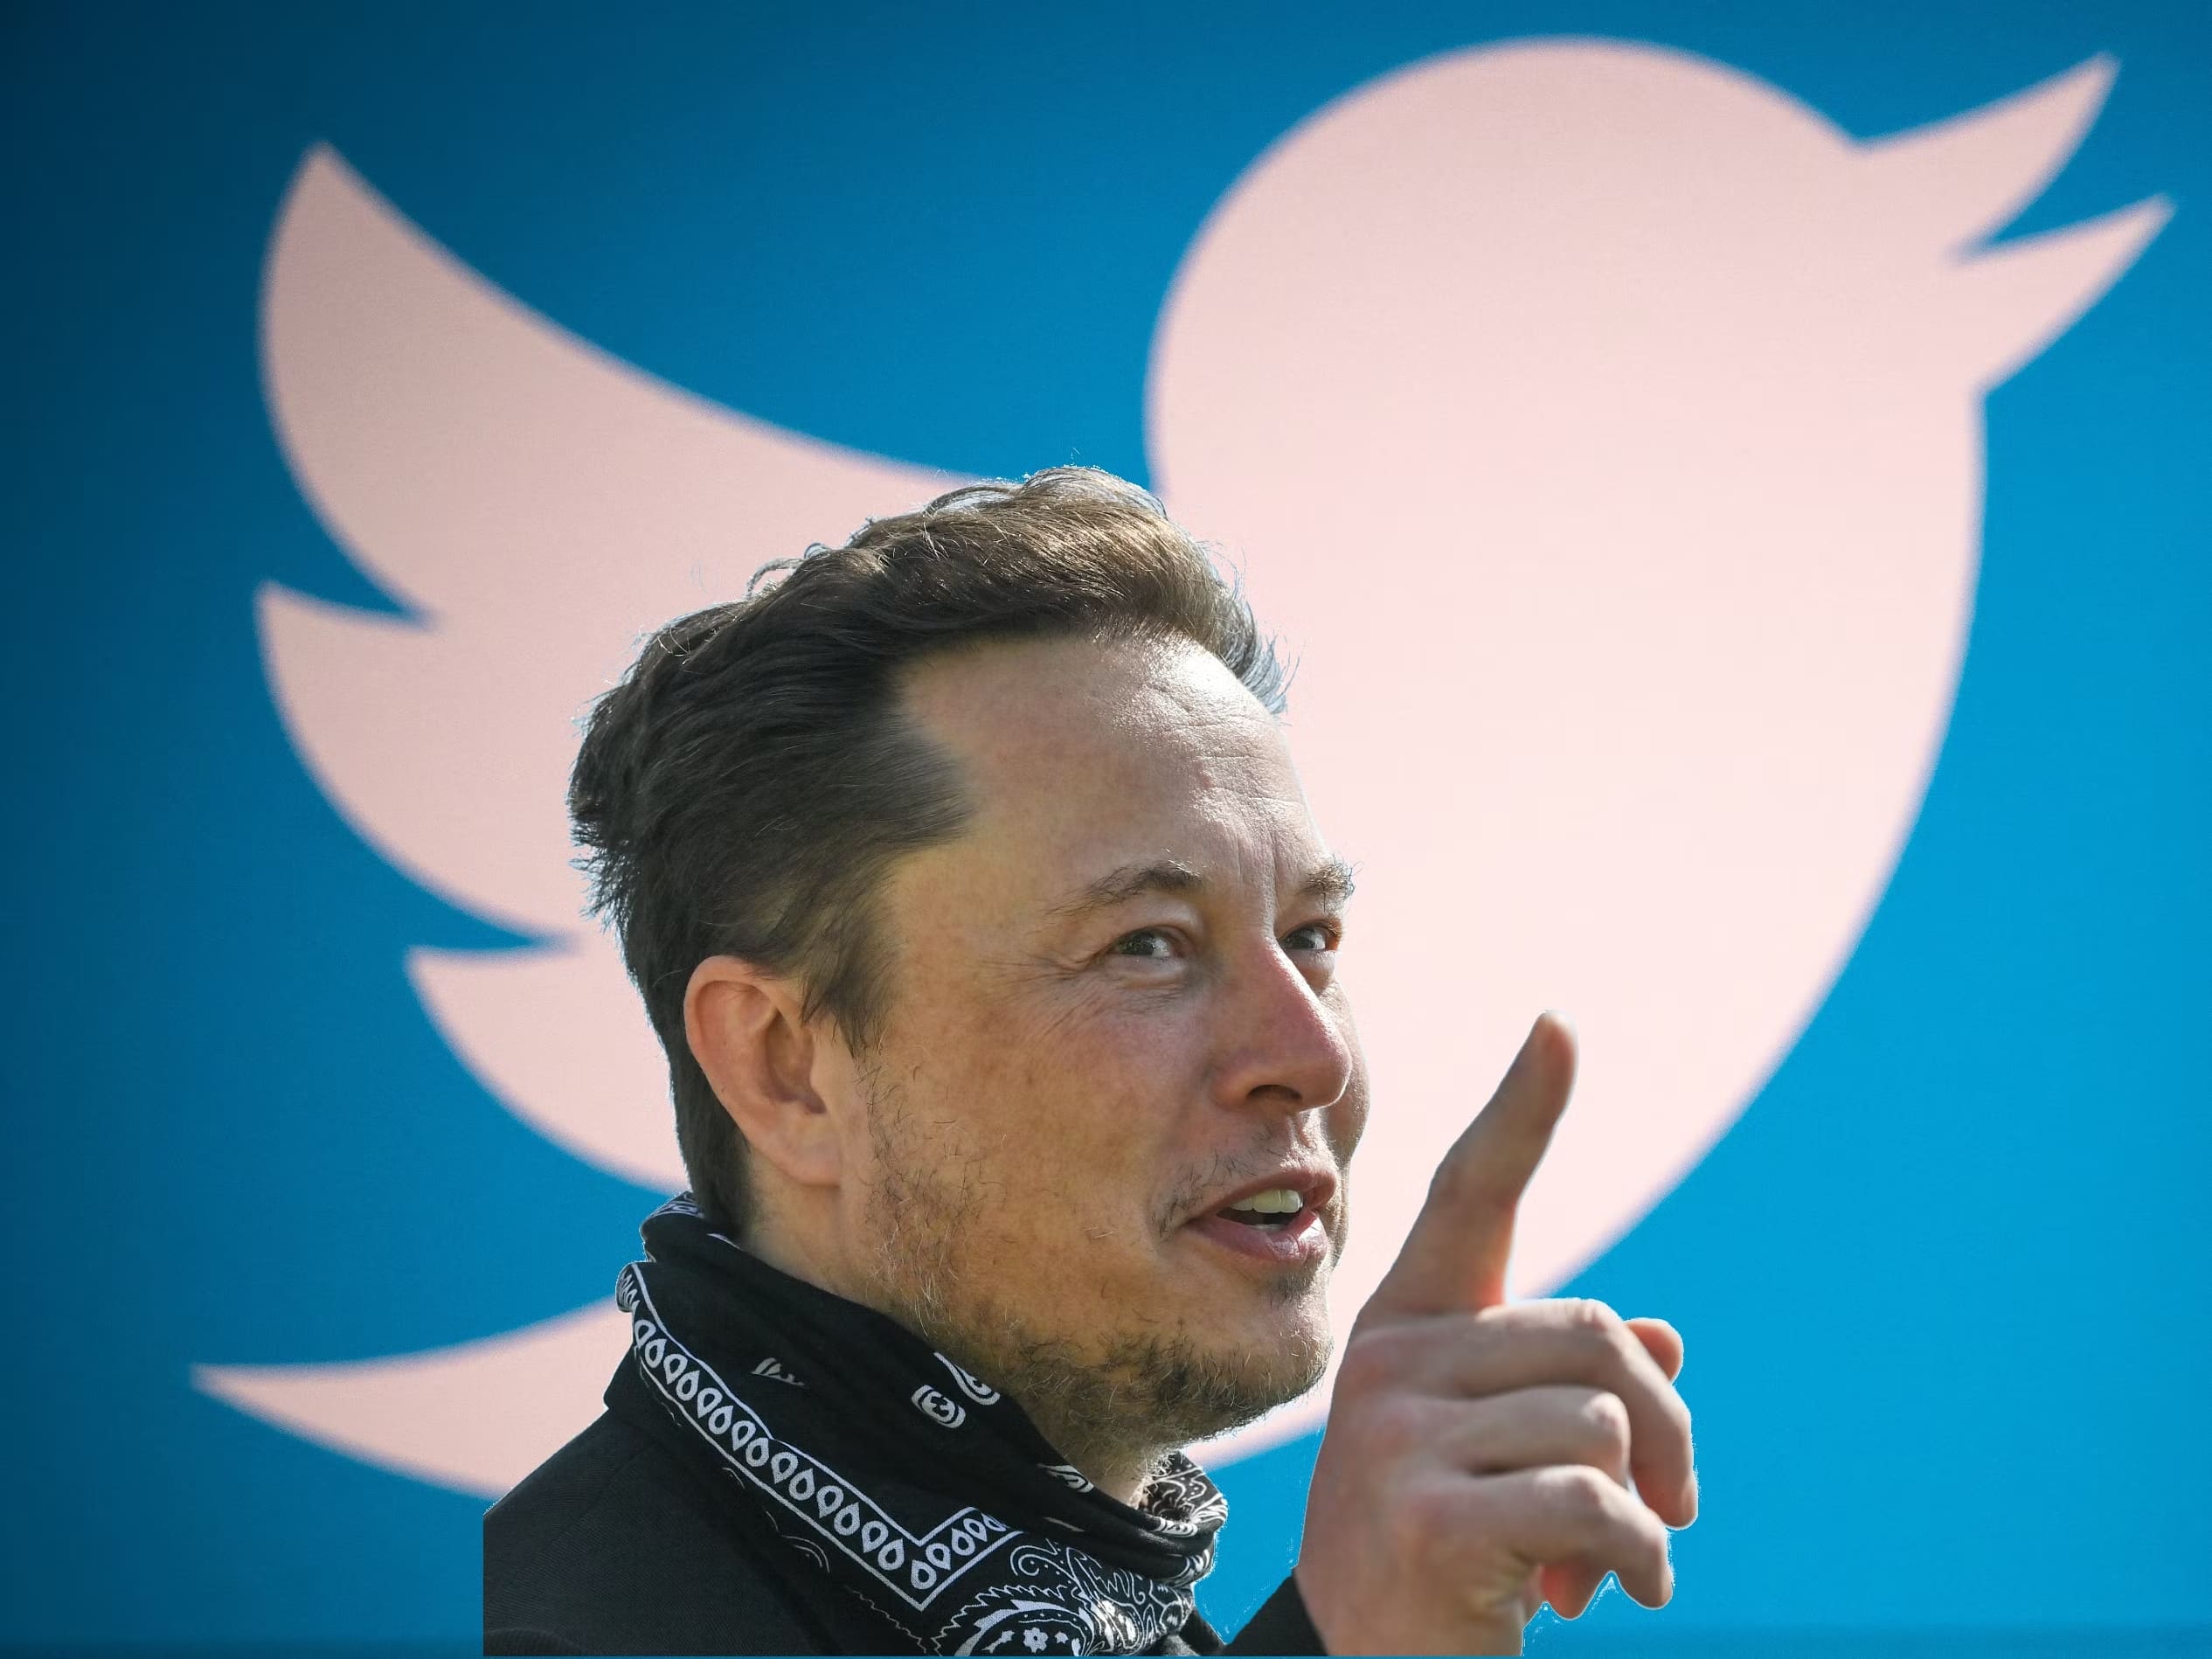 Changes on Twitter for Elon Musk